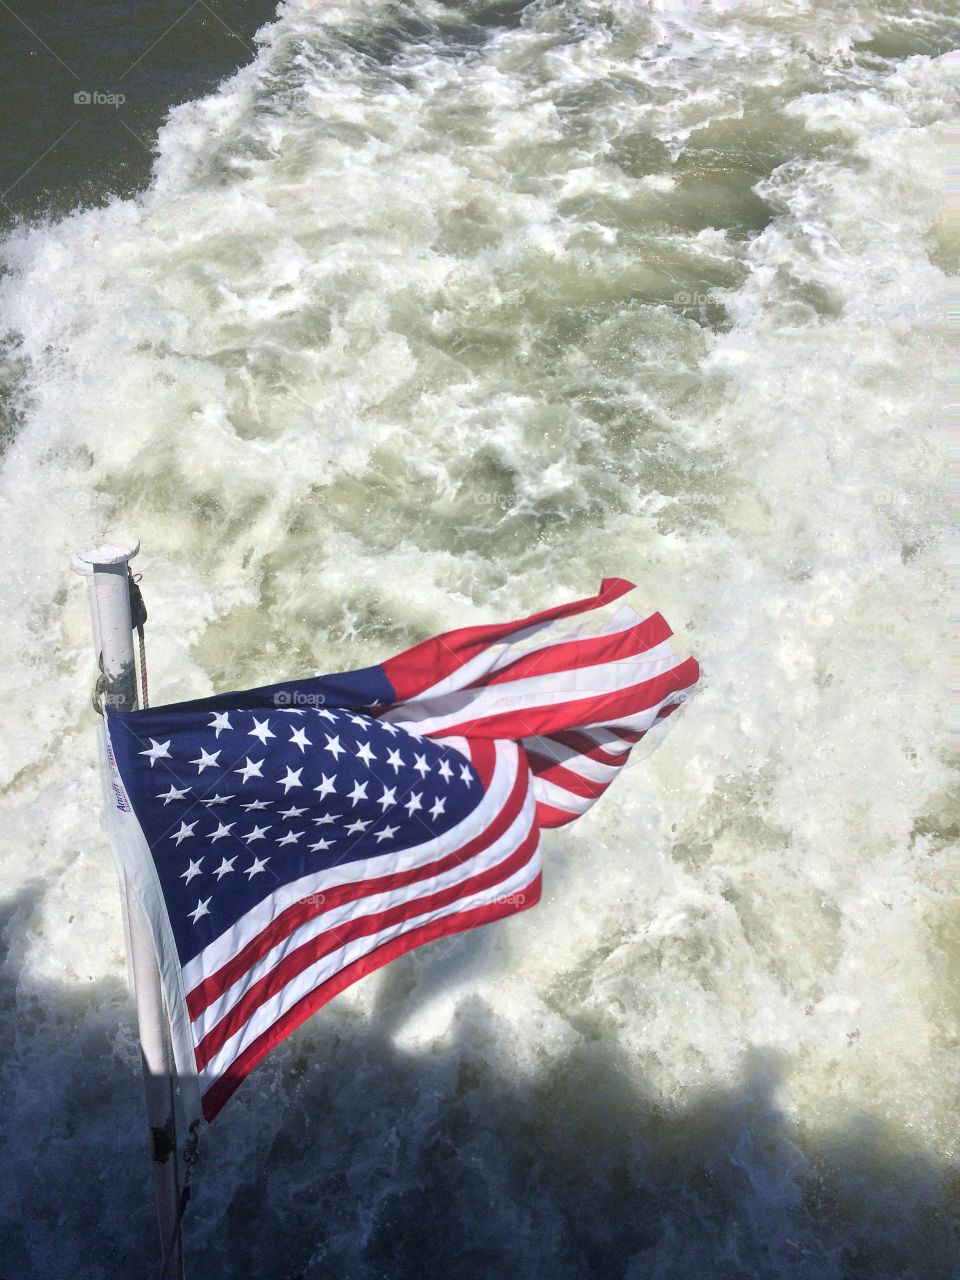 American boating
